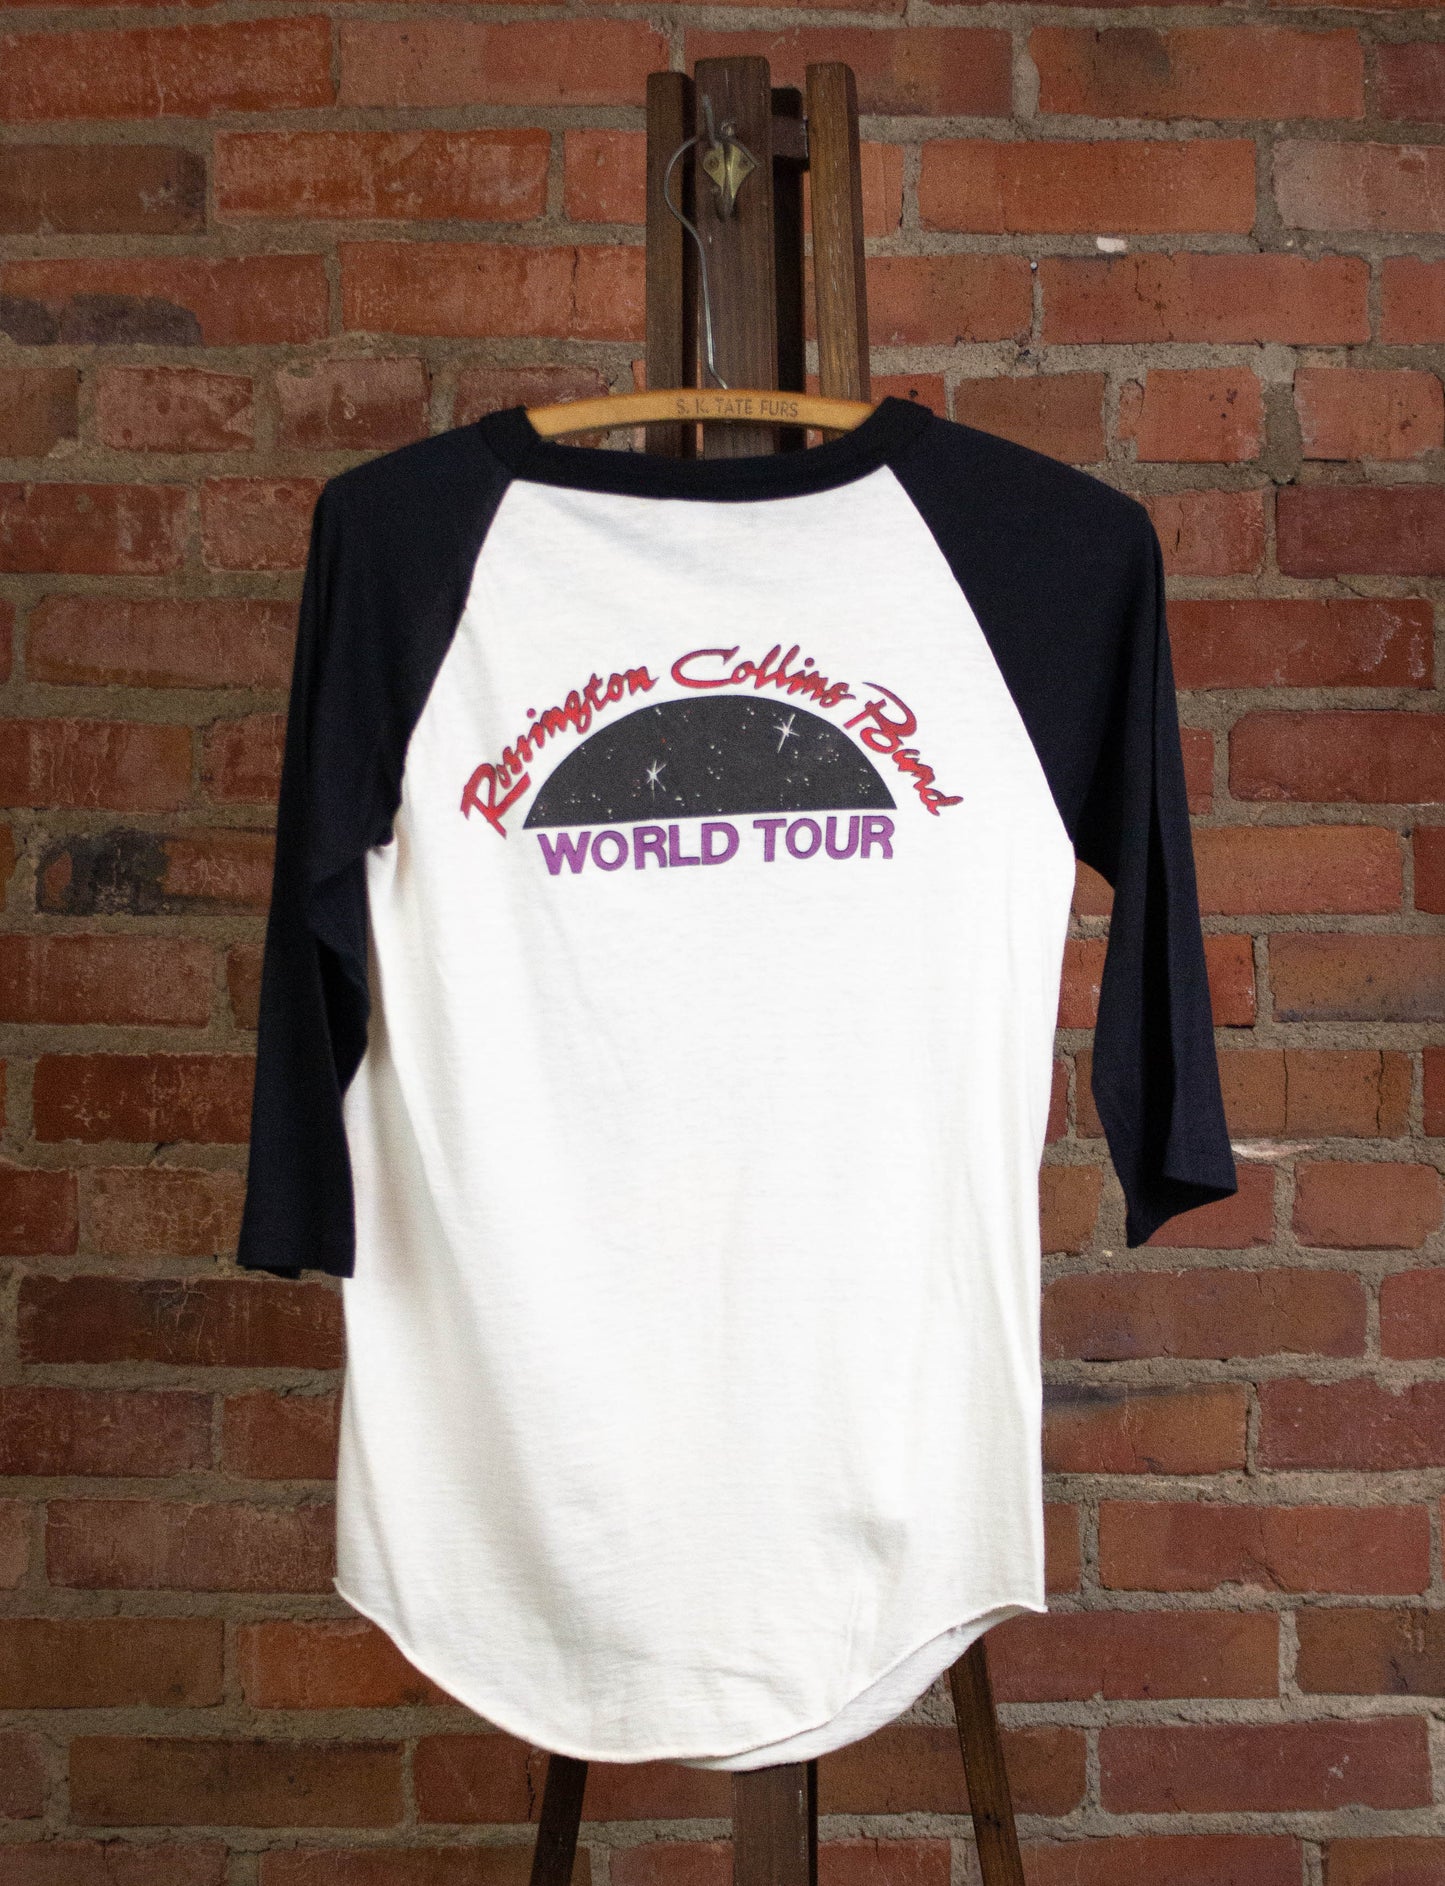 Vintage Rossington Collins Band 1981 World Tour Raglan Concert T Shirt White and Black Small